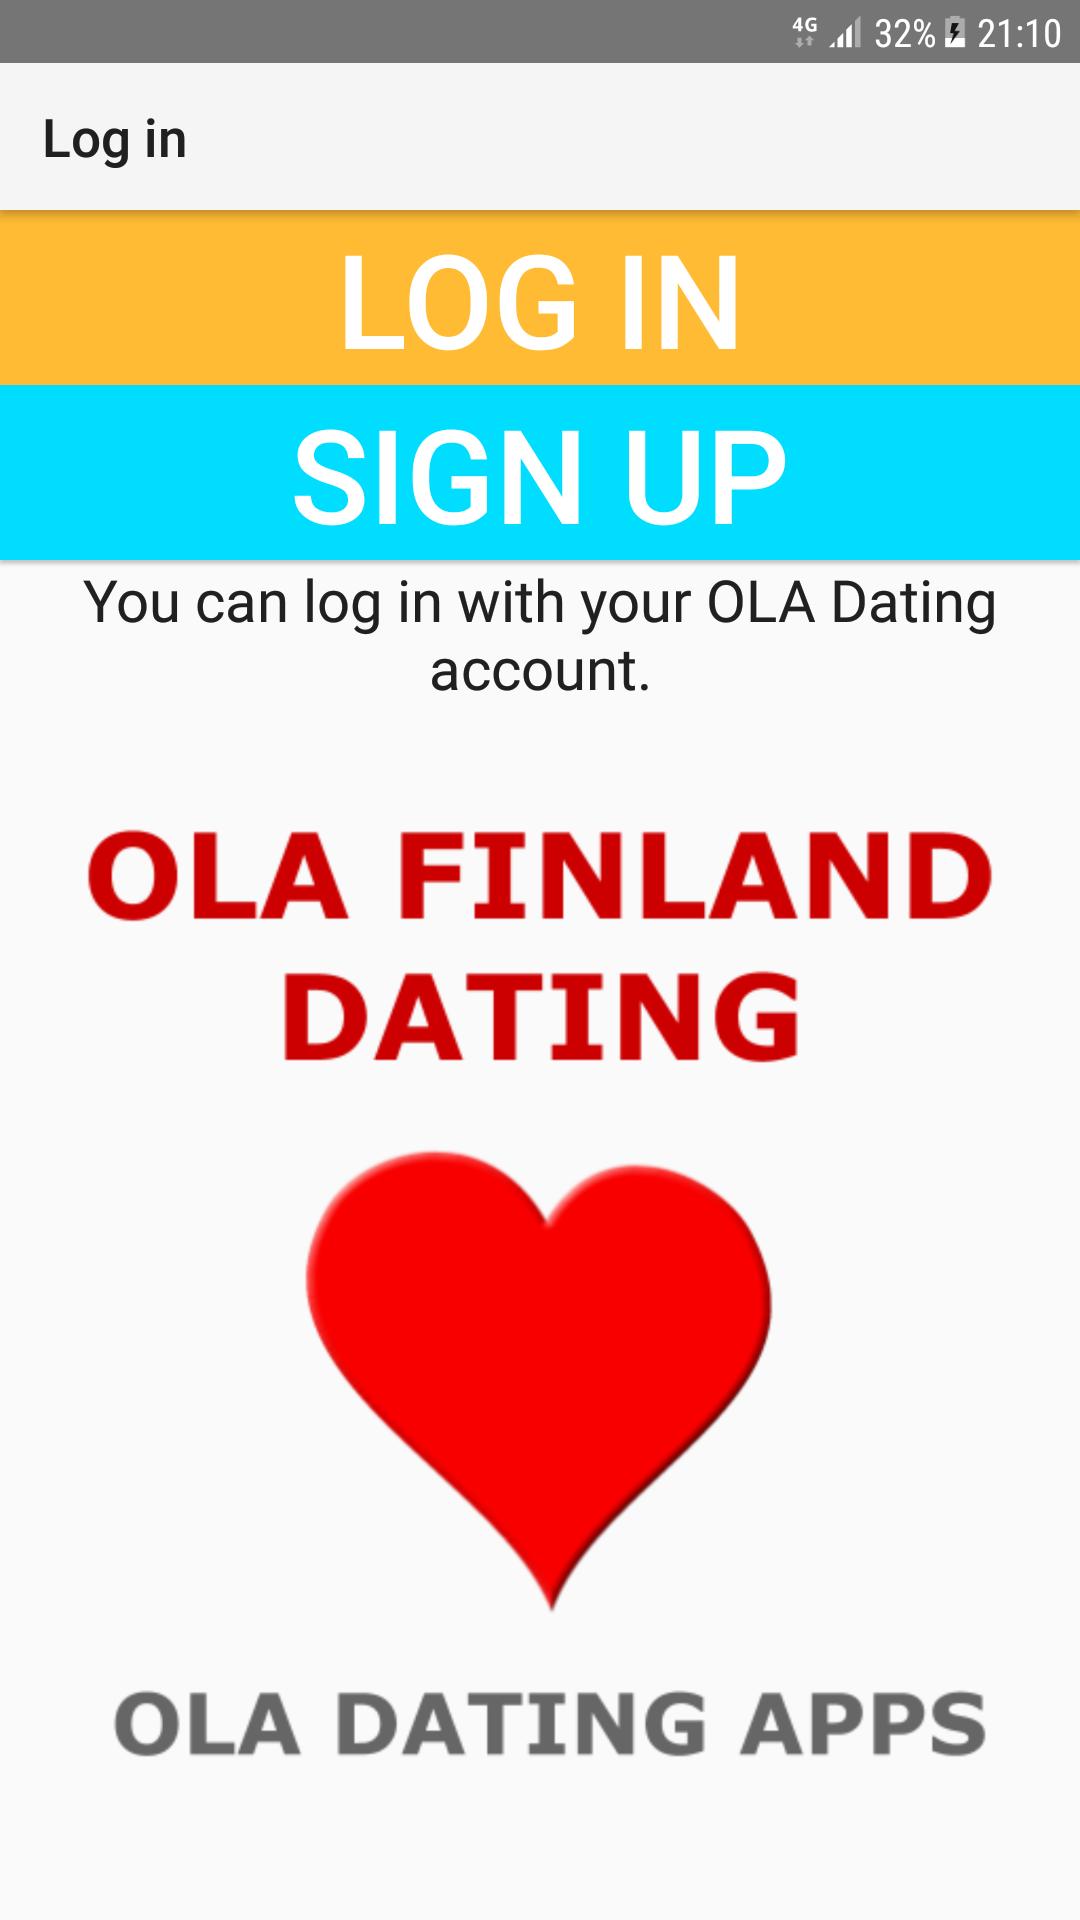 Baieti frumosi din Finlanda sunt interesati de dating serios